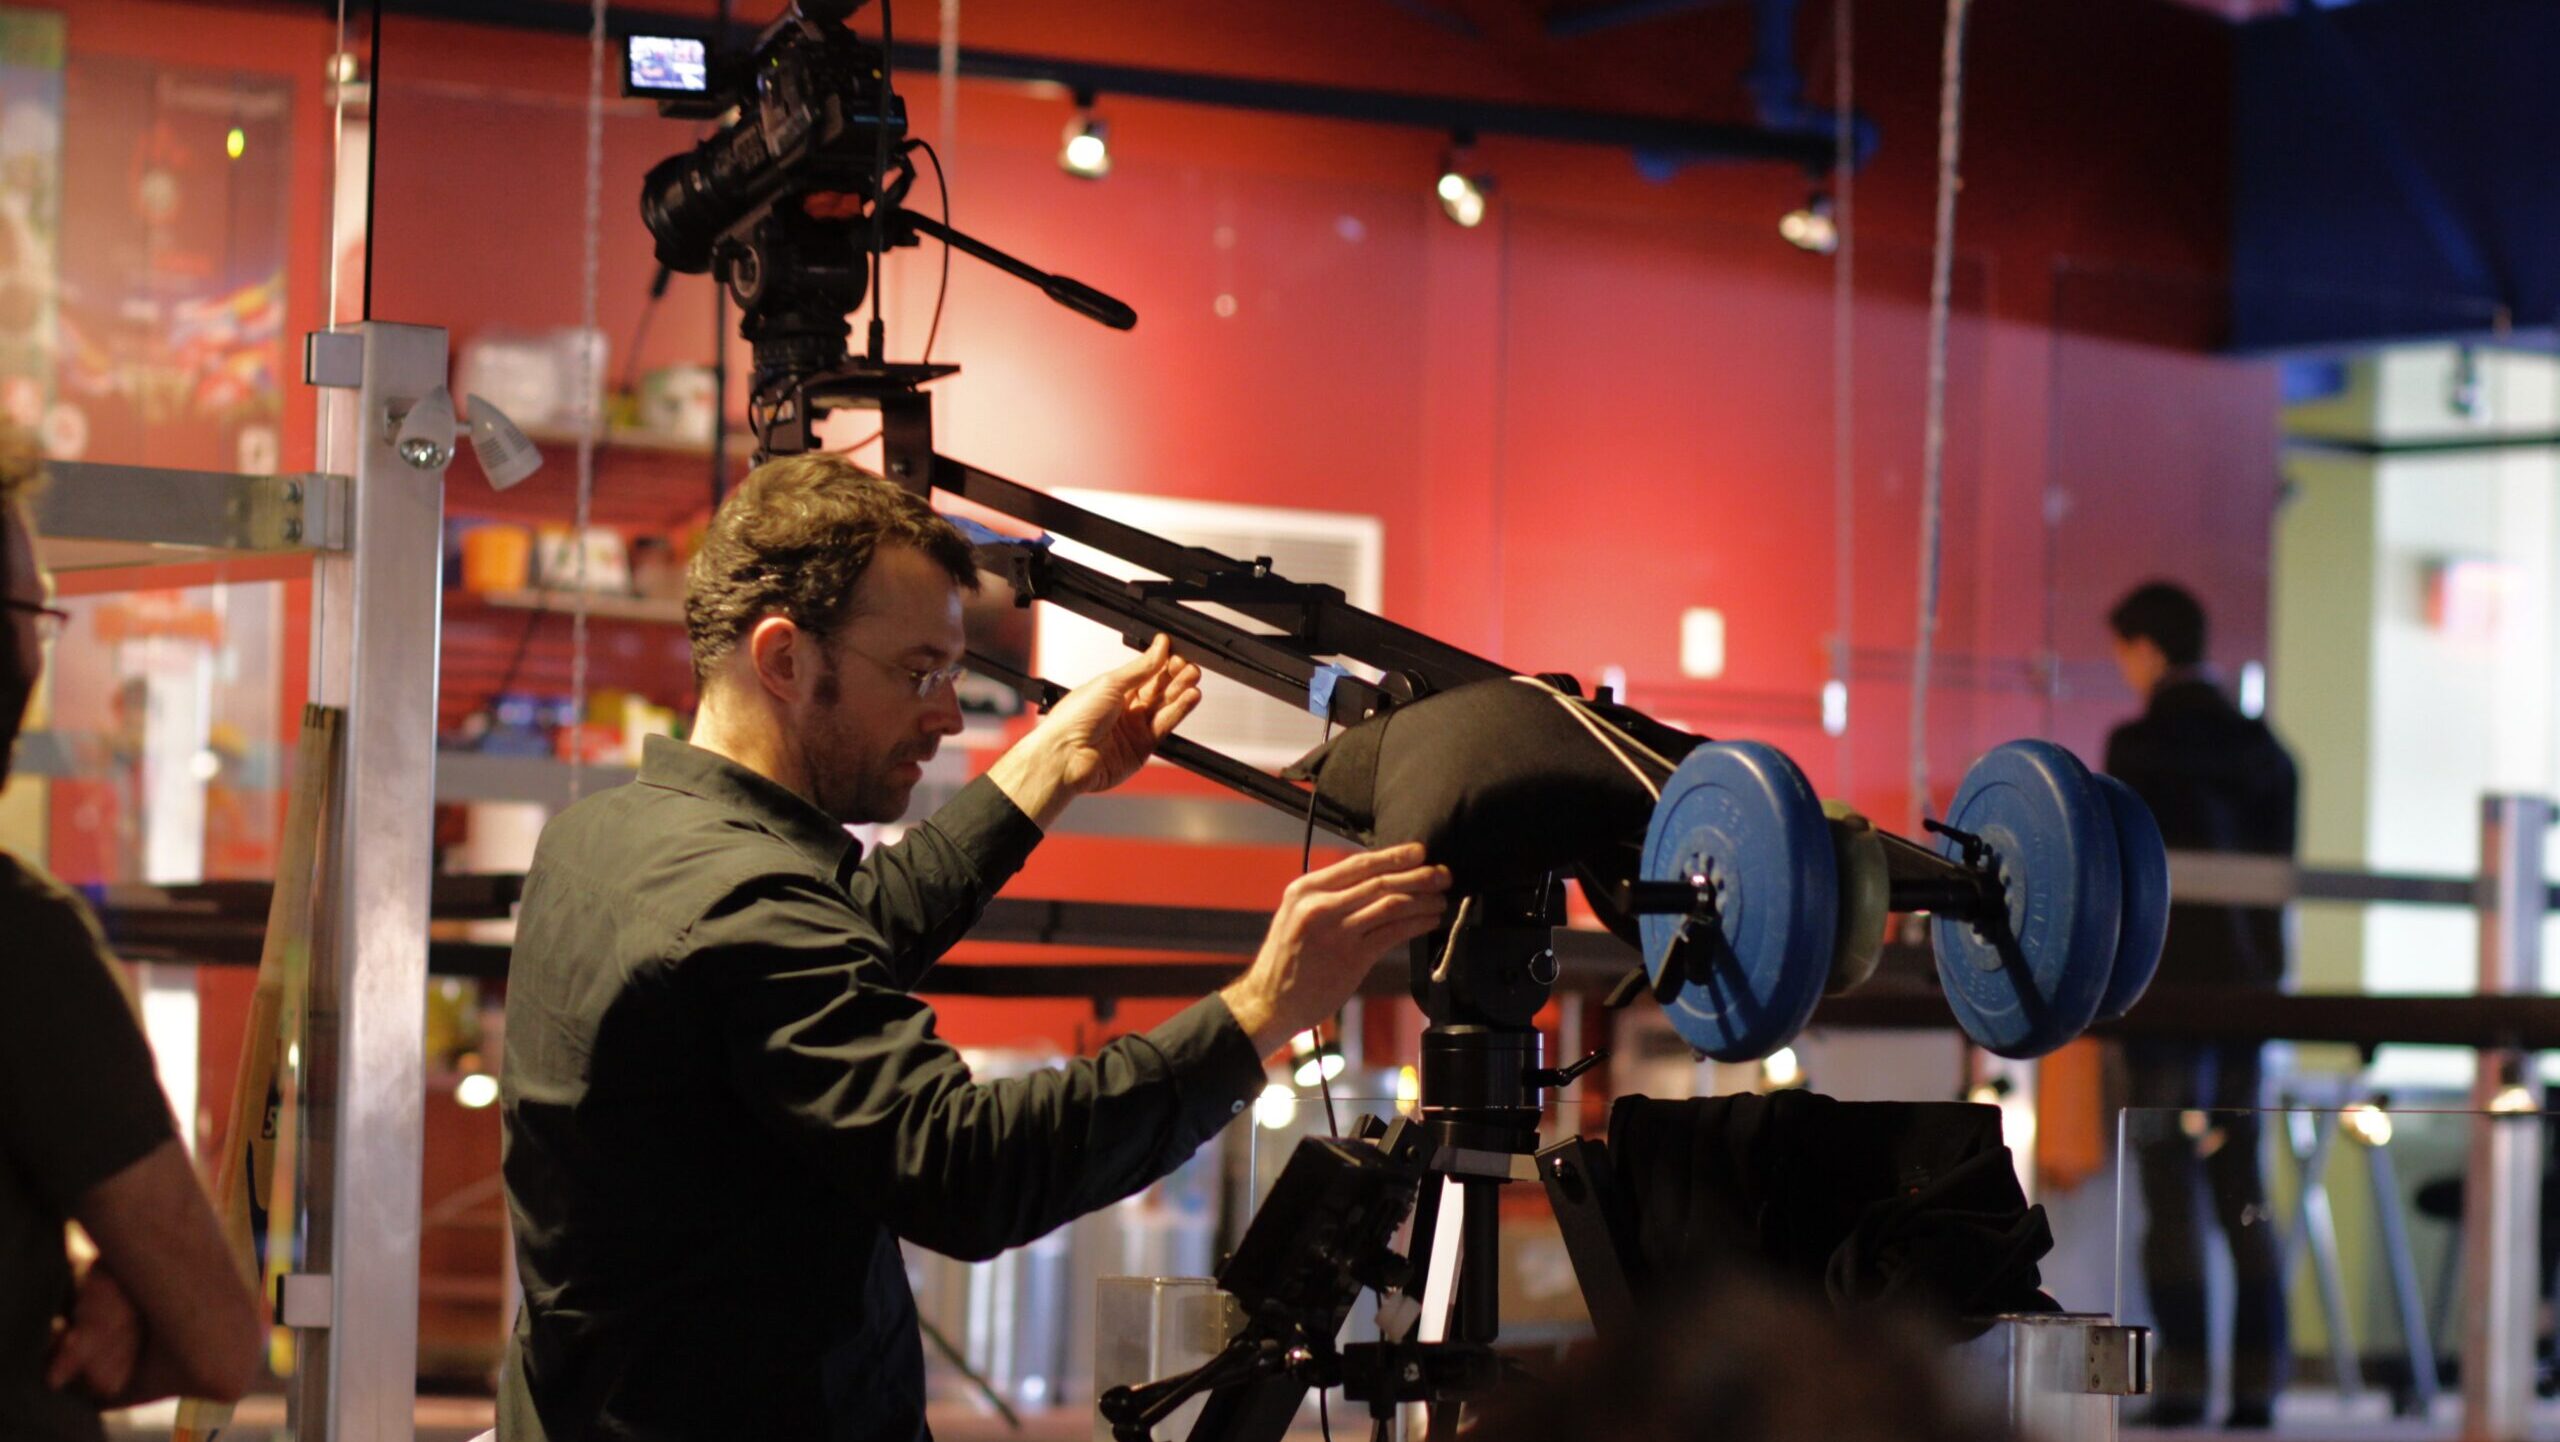 cameraman works with camera on mini jib crane, counterbalanced with weights, interior scene